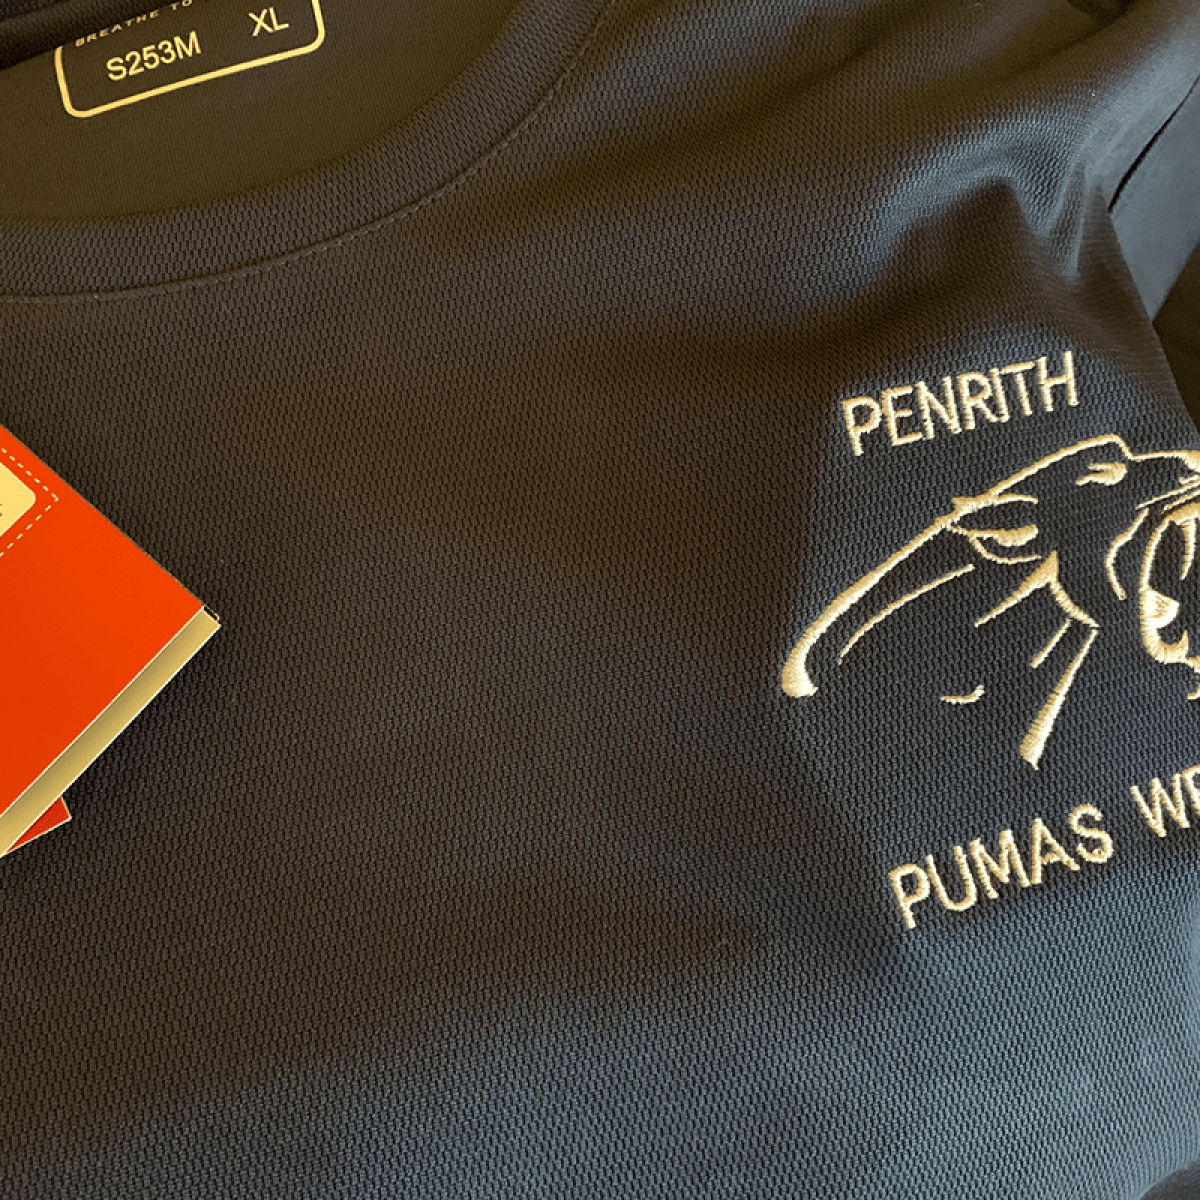 Penrith Puma's Team Kit